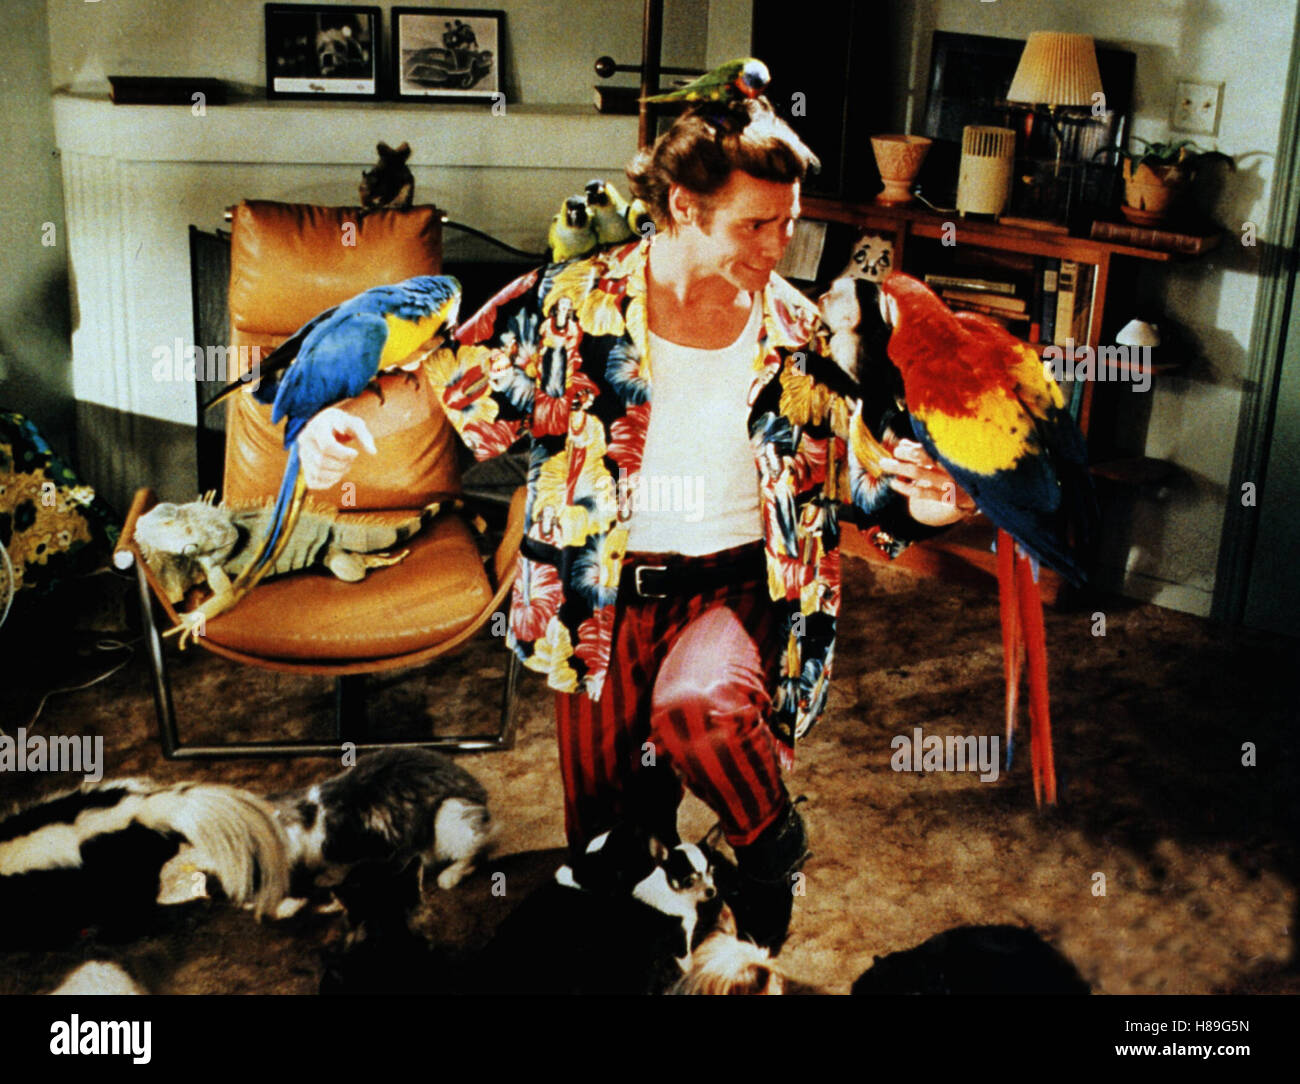 Ace Ventura - Ein tierischer Detektiv, (Ace Ventura: l'Acchiappanimali) USA 1994, Regie: Tom Shadyac, Jim Carrey, Stichwort: Vögel, Papageien, Hunde Foto Stock